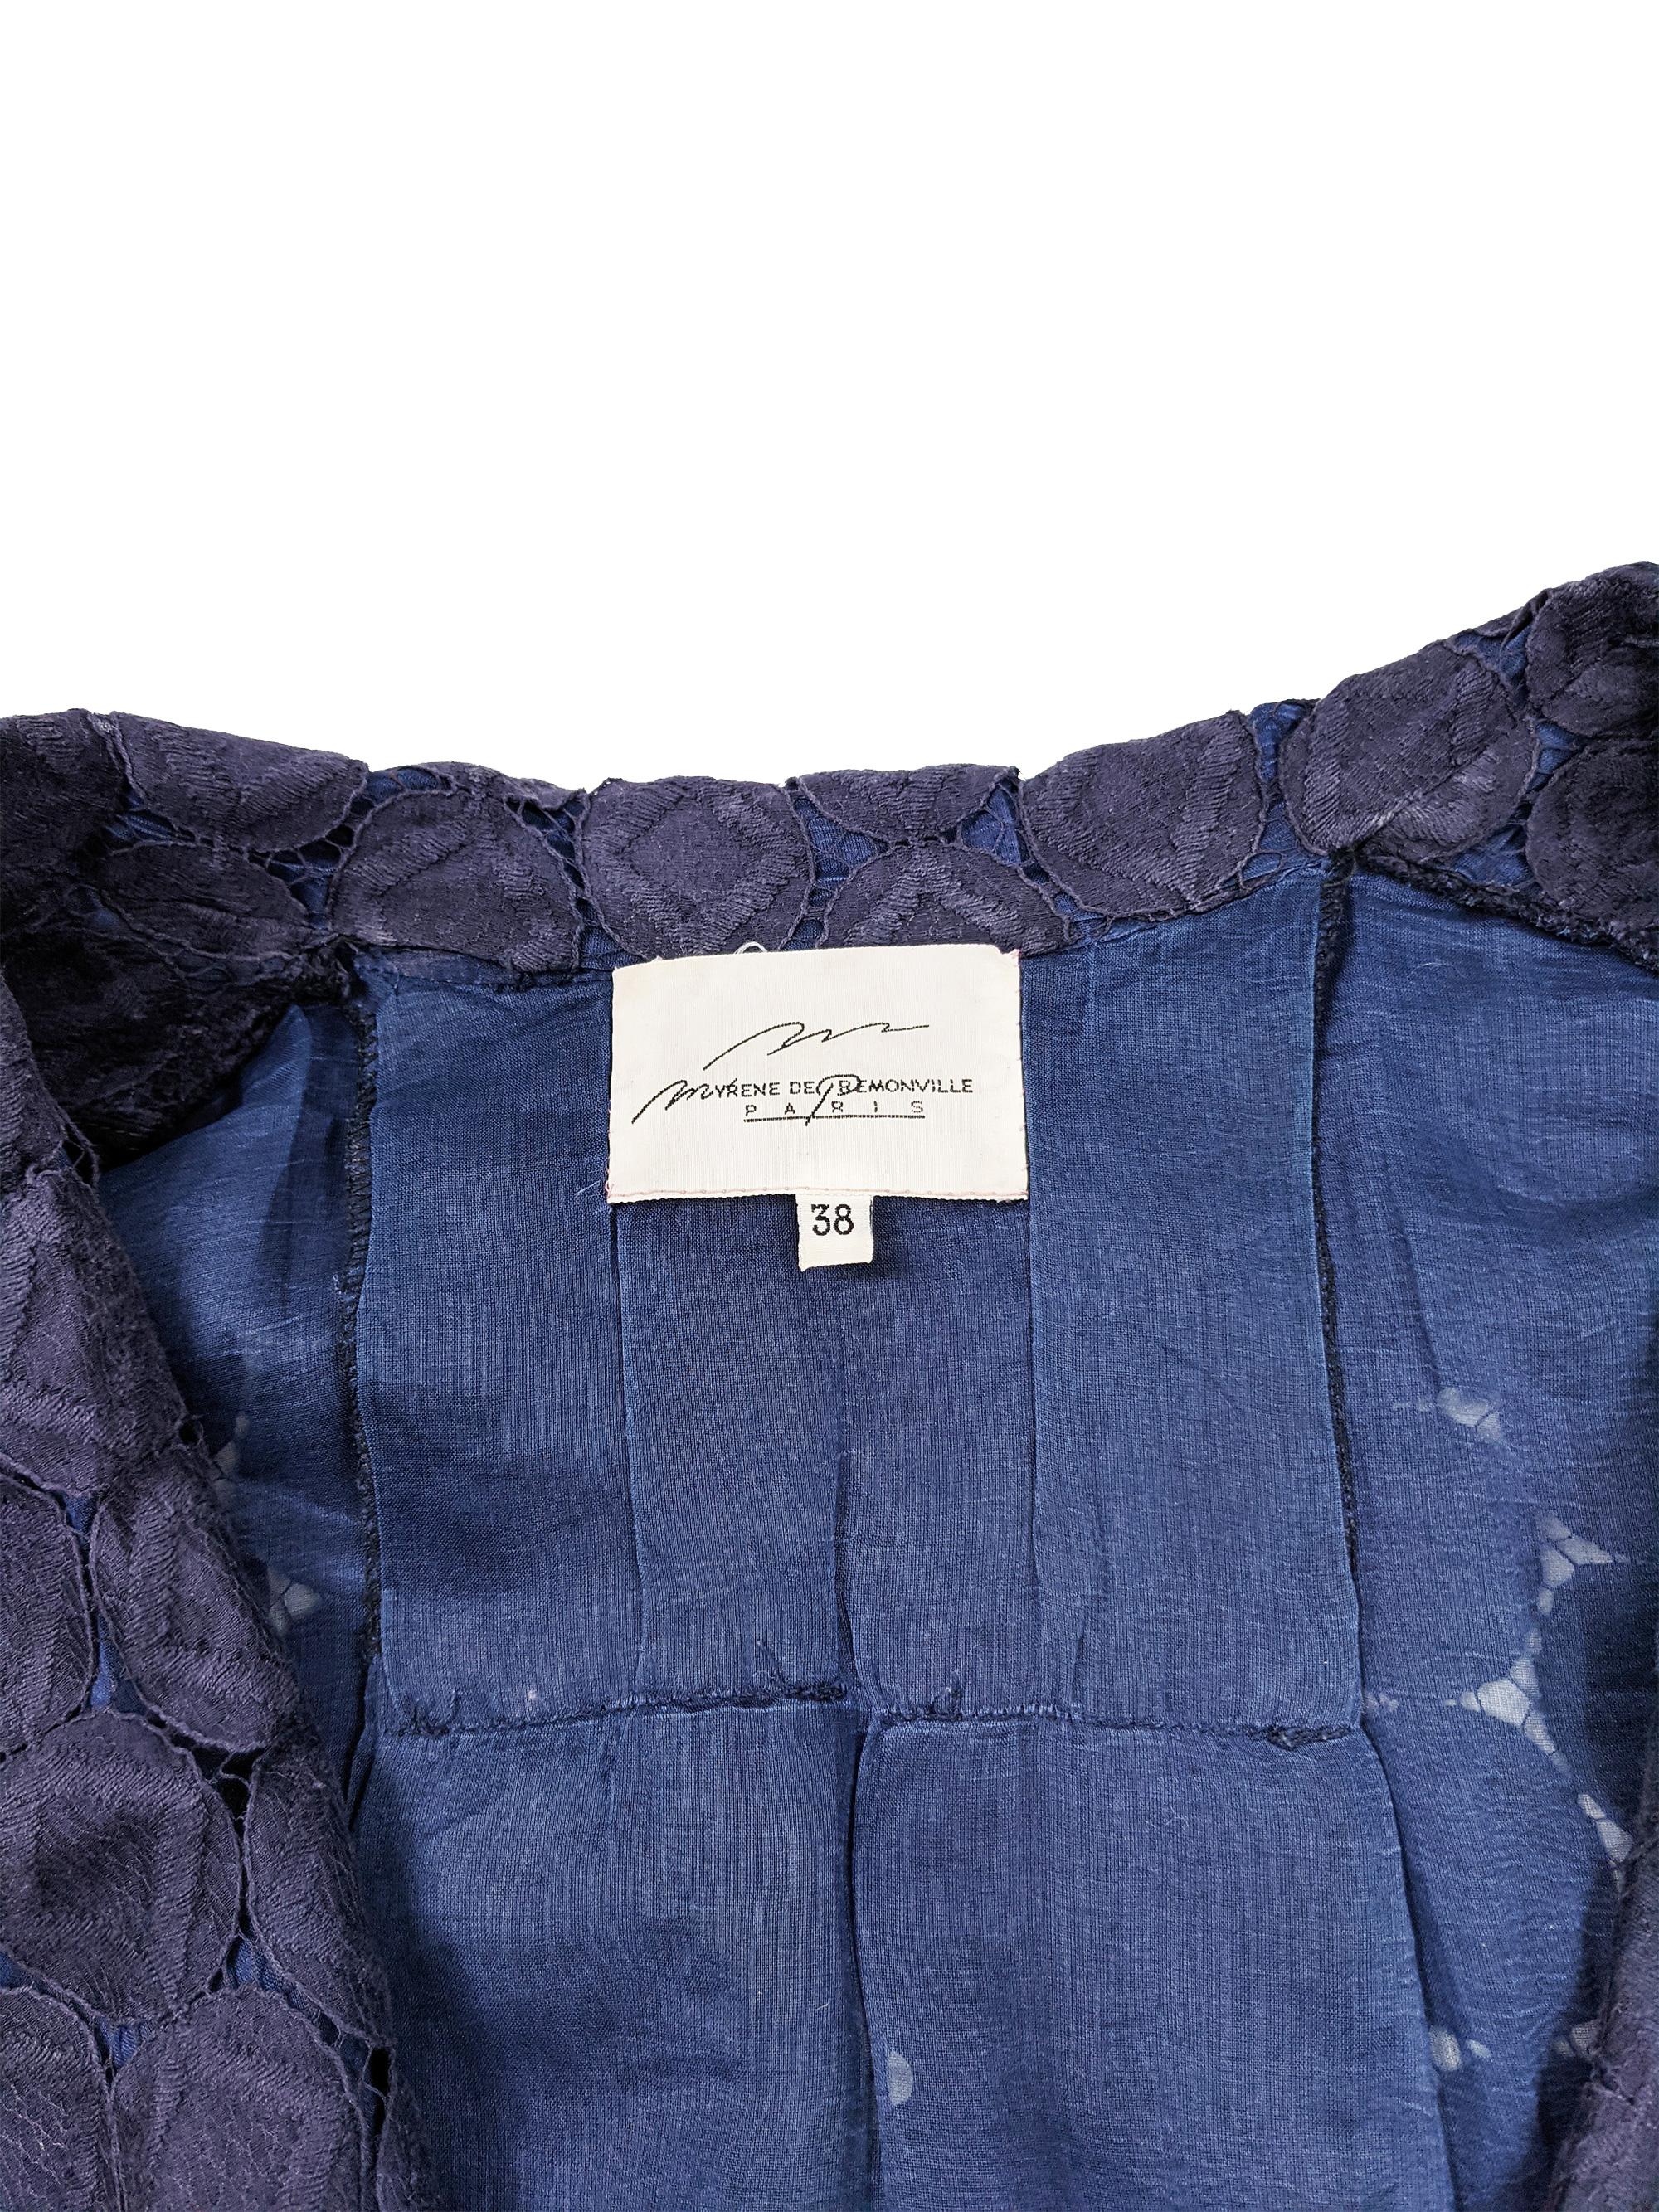 Myrene de Premonville Vintage Belted Lace Swing Coat, S/S 1991 2